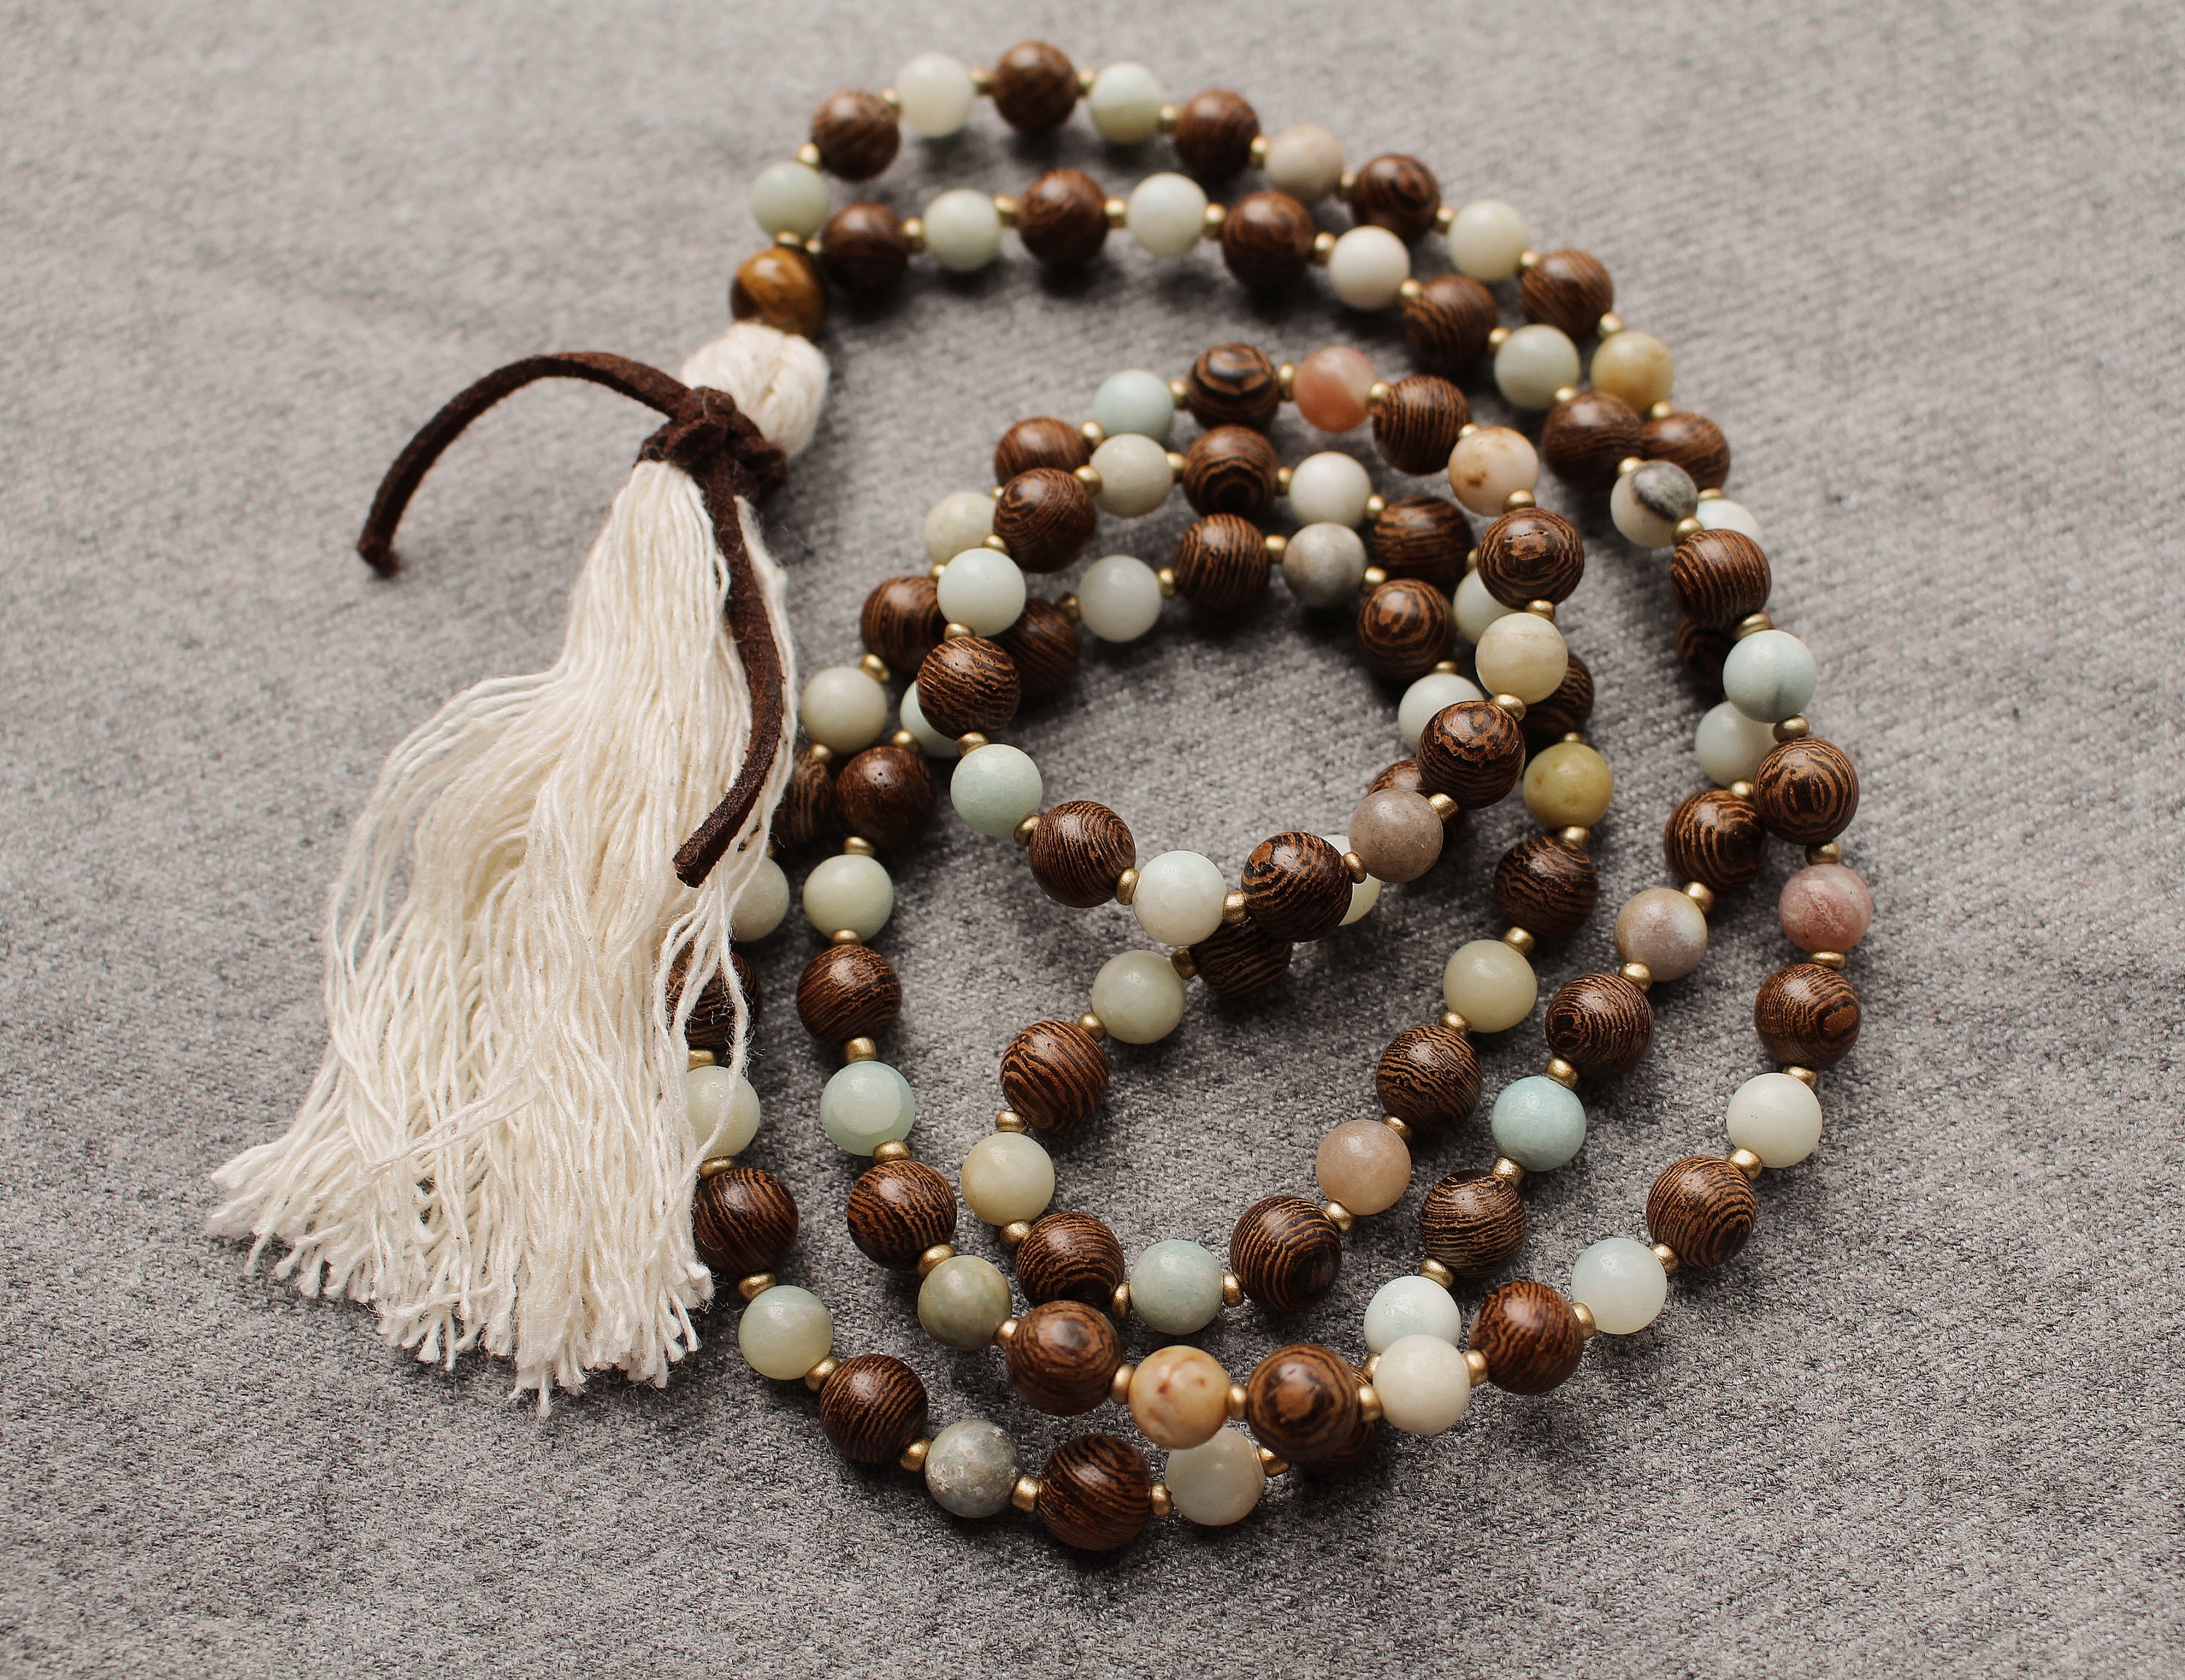 108 Bead Mala Meditation Prayer Beads Steadiness -  Canada